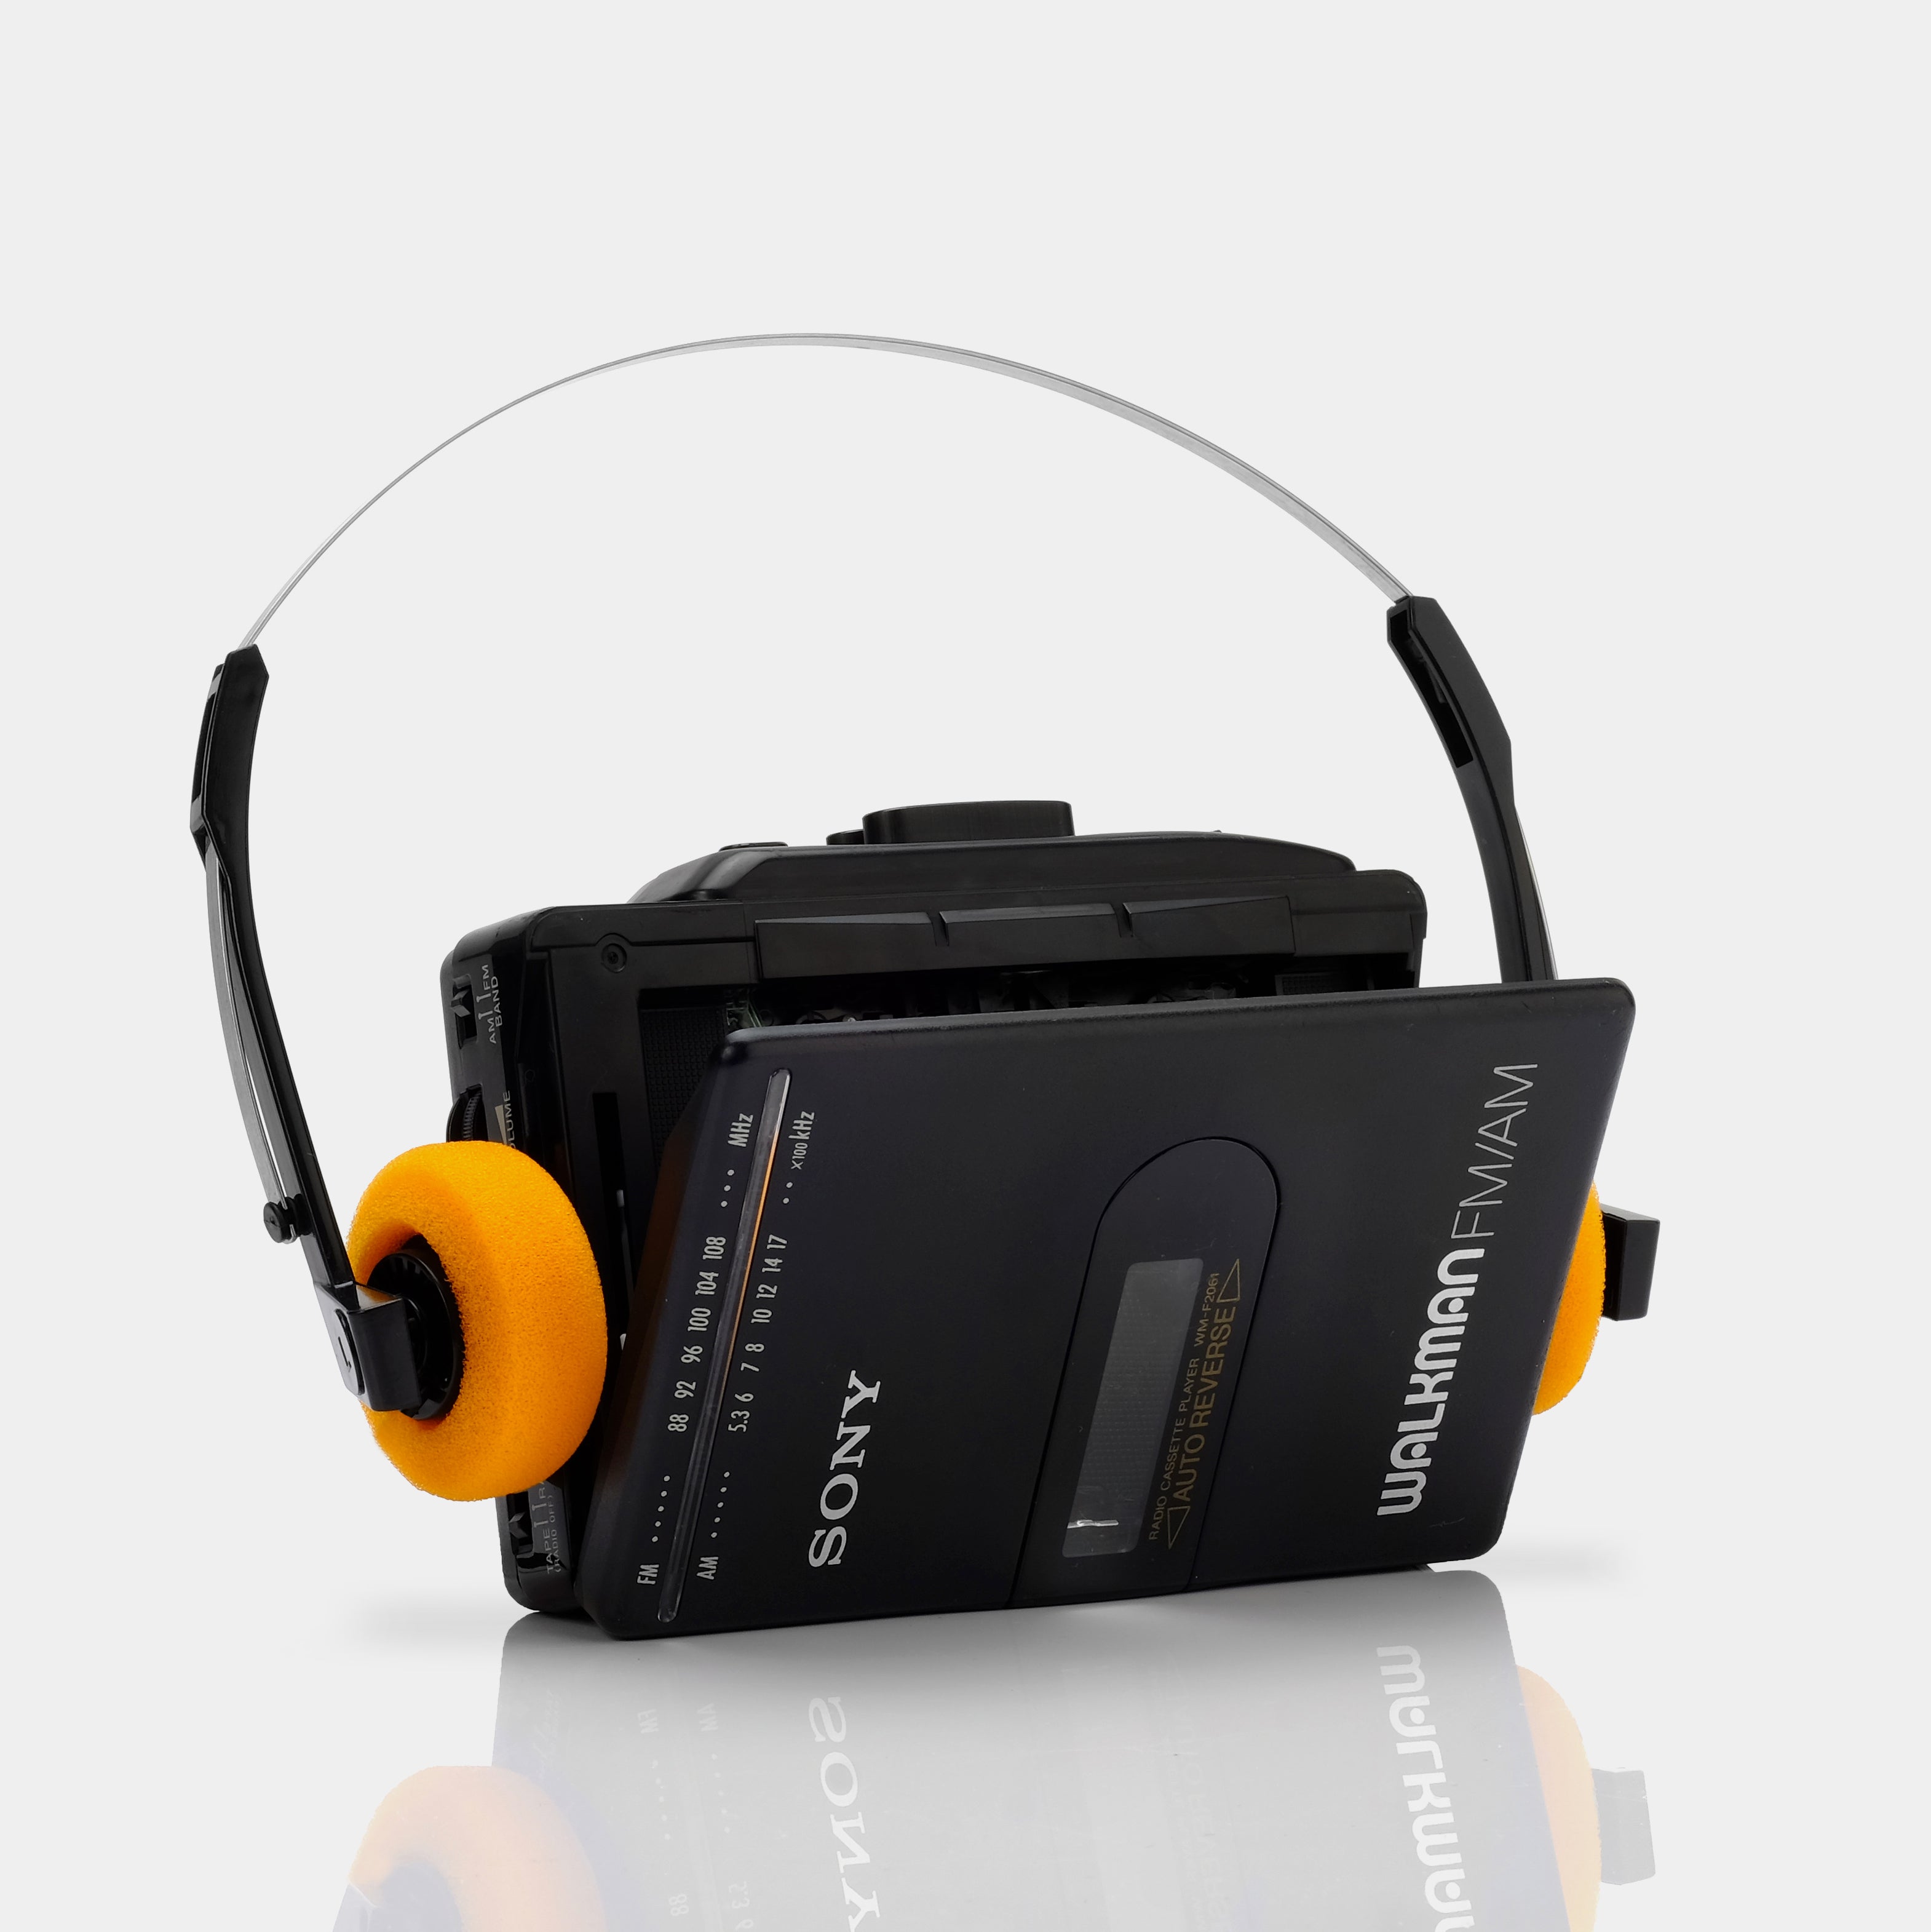 Sony Walkman WM-F2061 AM/FM Portable Cassette Player